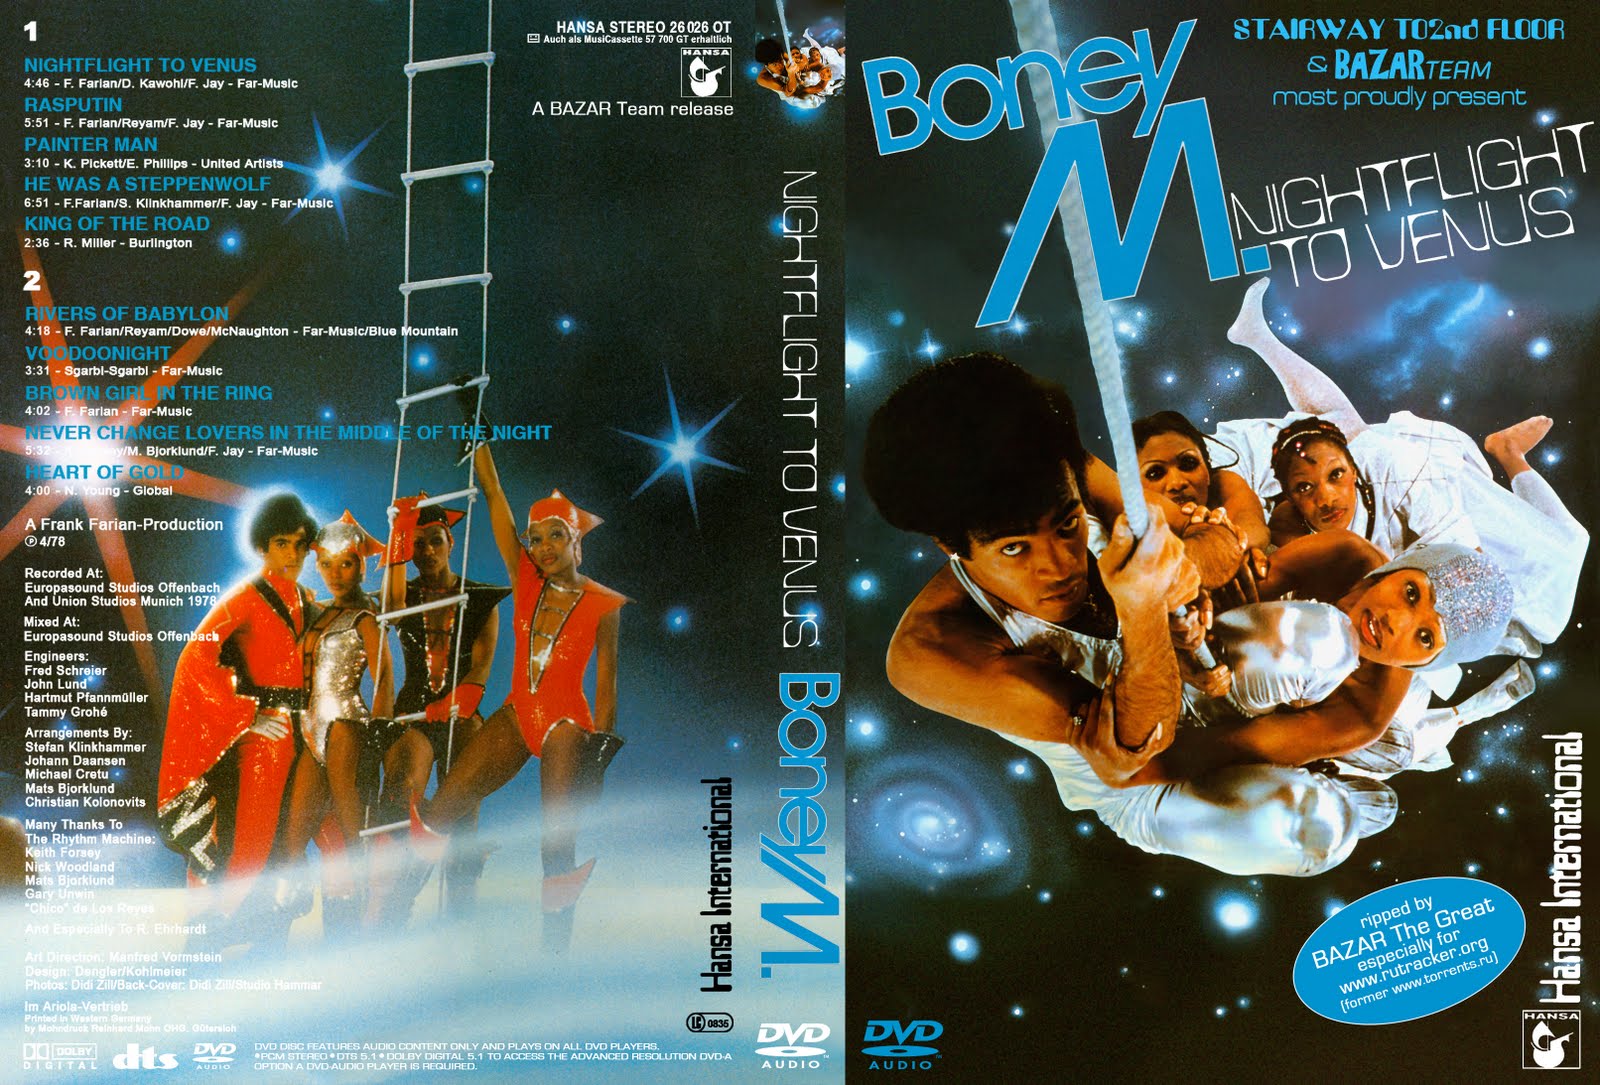 Слушать бони полет на венеру. Boney m Venus Nightflight. 1978 - Nightflight to Venus. Boney m – Nightflight to Venus. Бони м полет на Венеру.